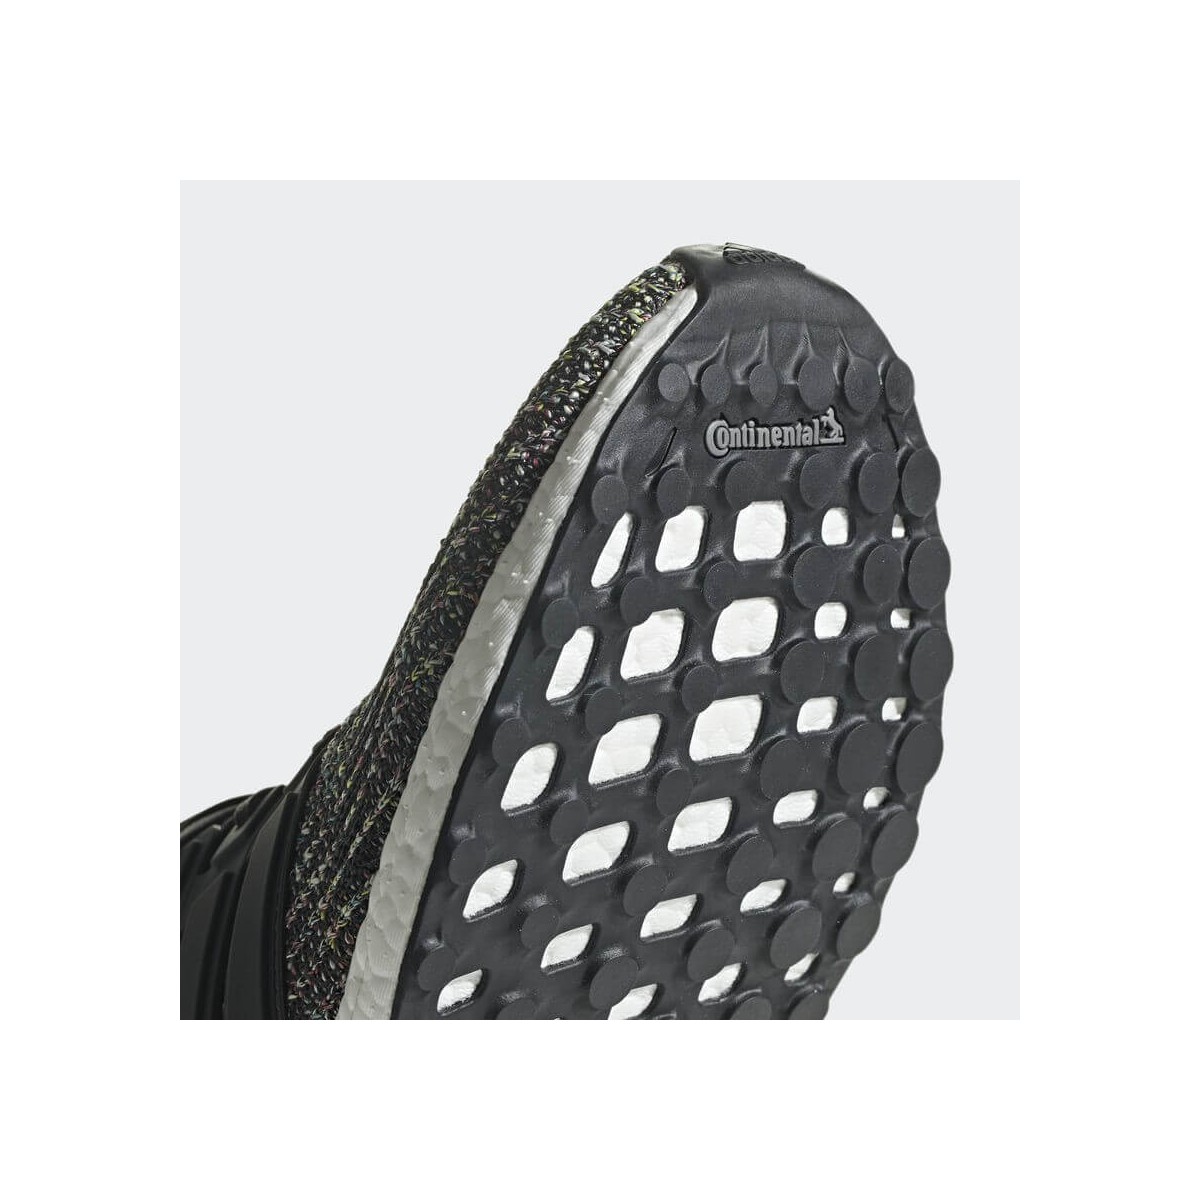 Zapatillas Adidas Ultra Boost Negro Gris